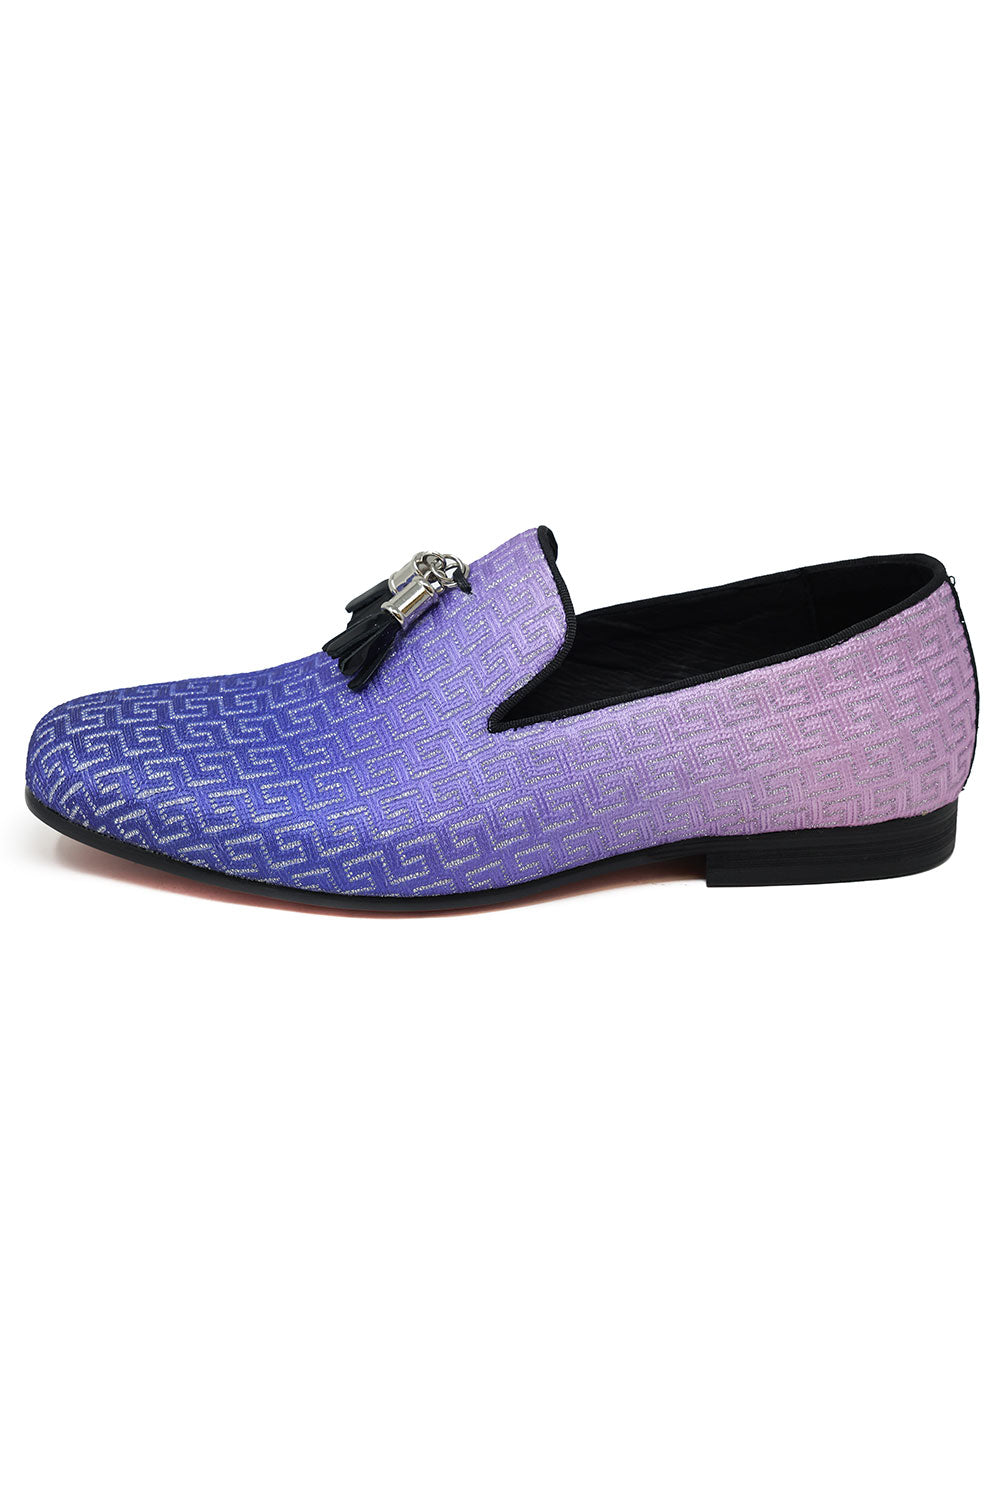 Barabas Men's Greek Key Pattern Tassel Slip On Loafer Shoes 2SH3098